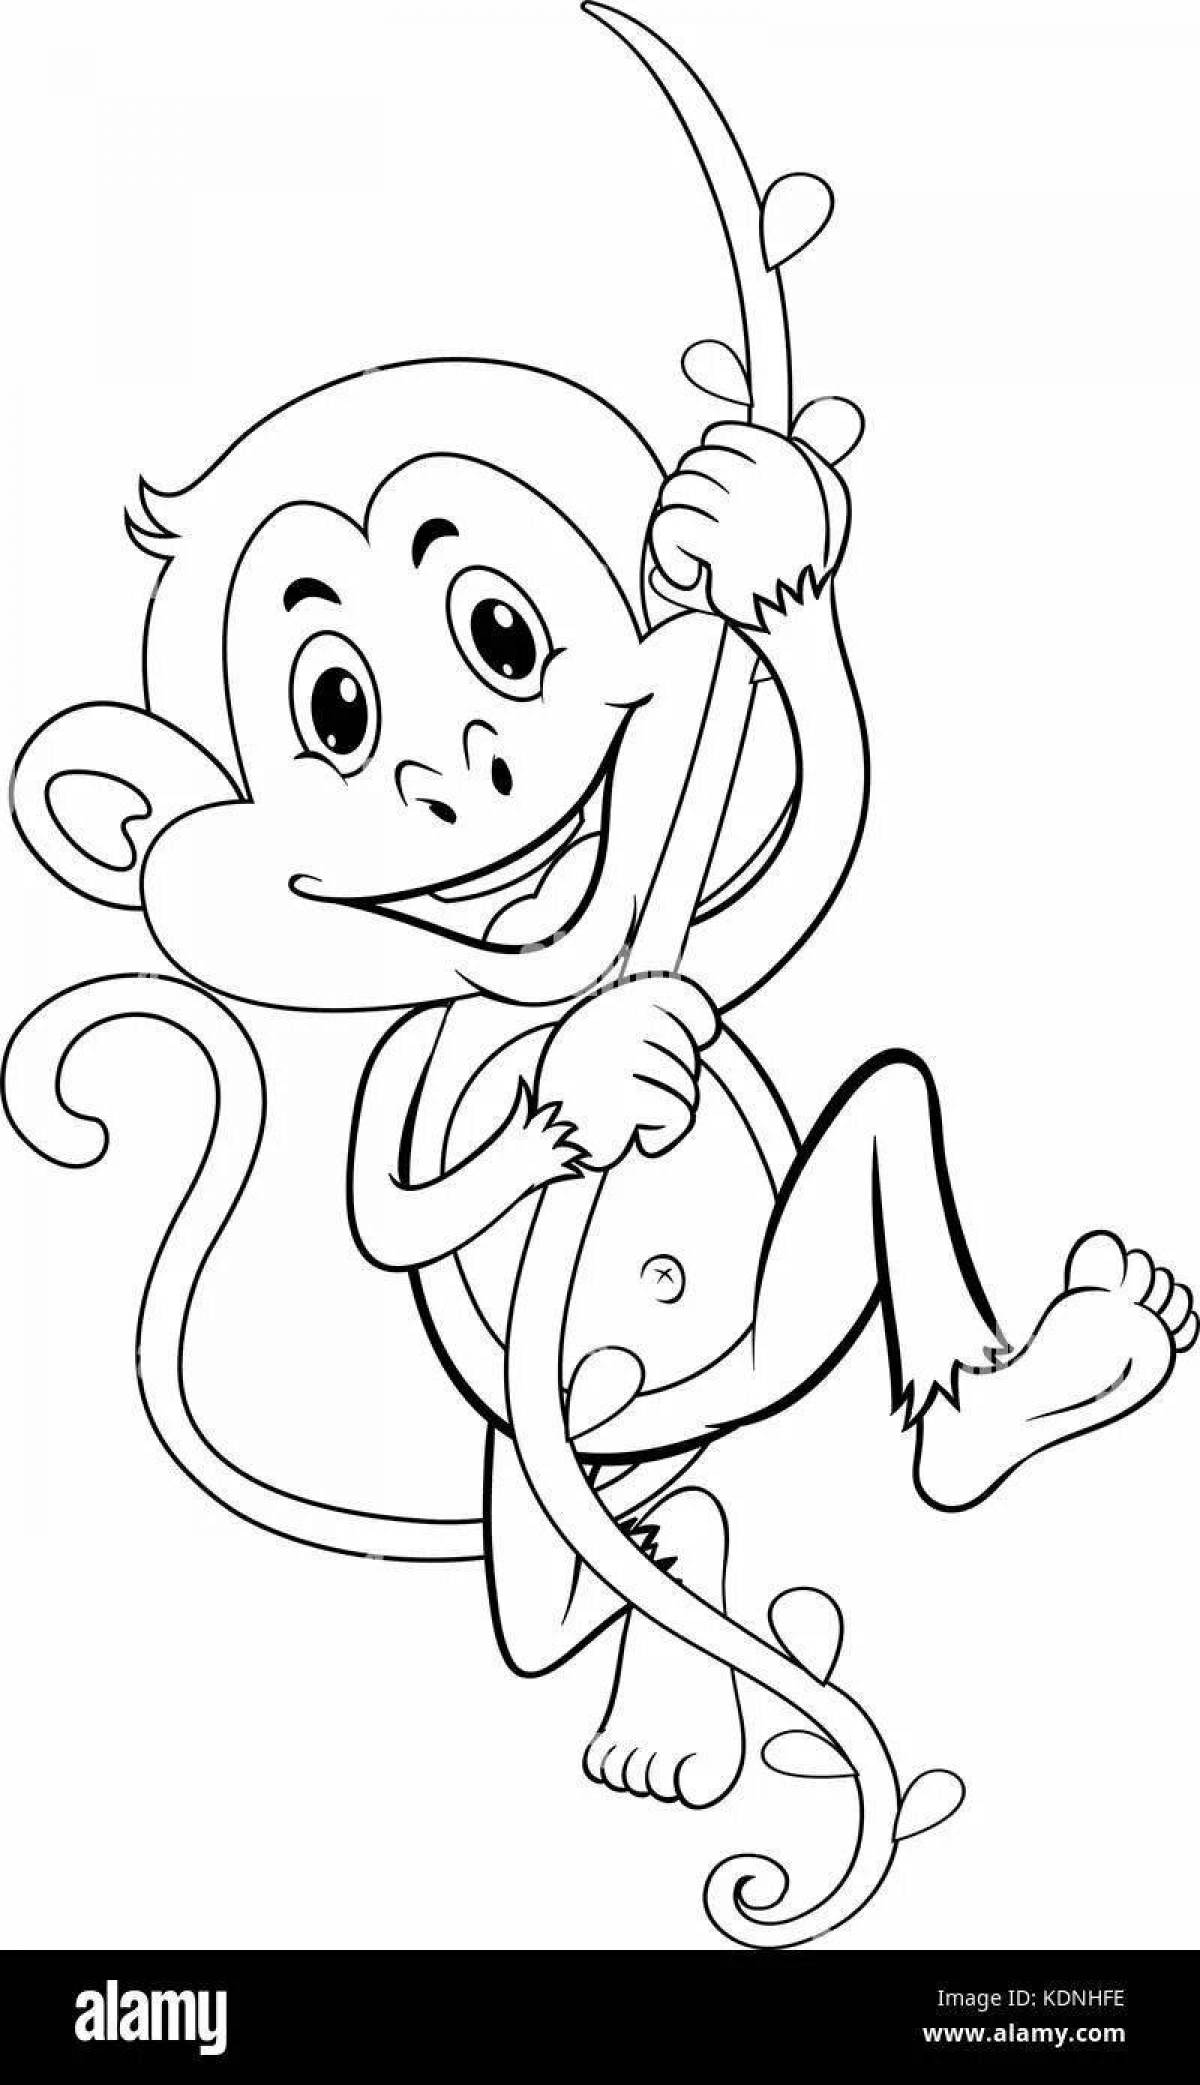 Развлекательная раскраска обезьяна житкова